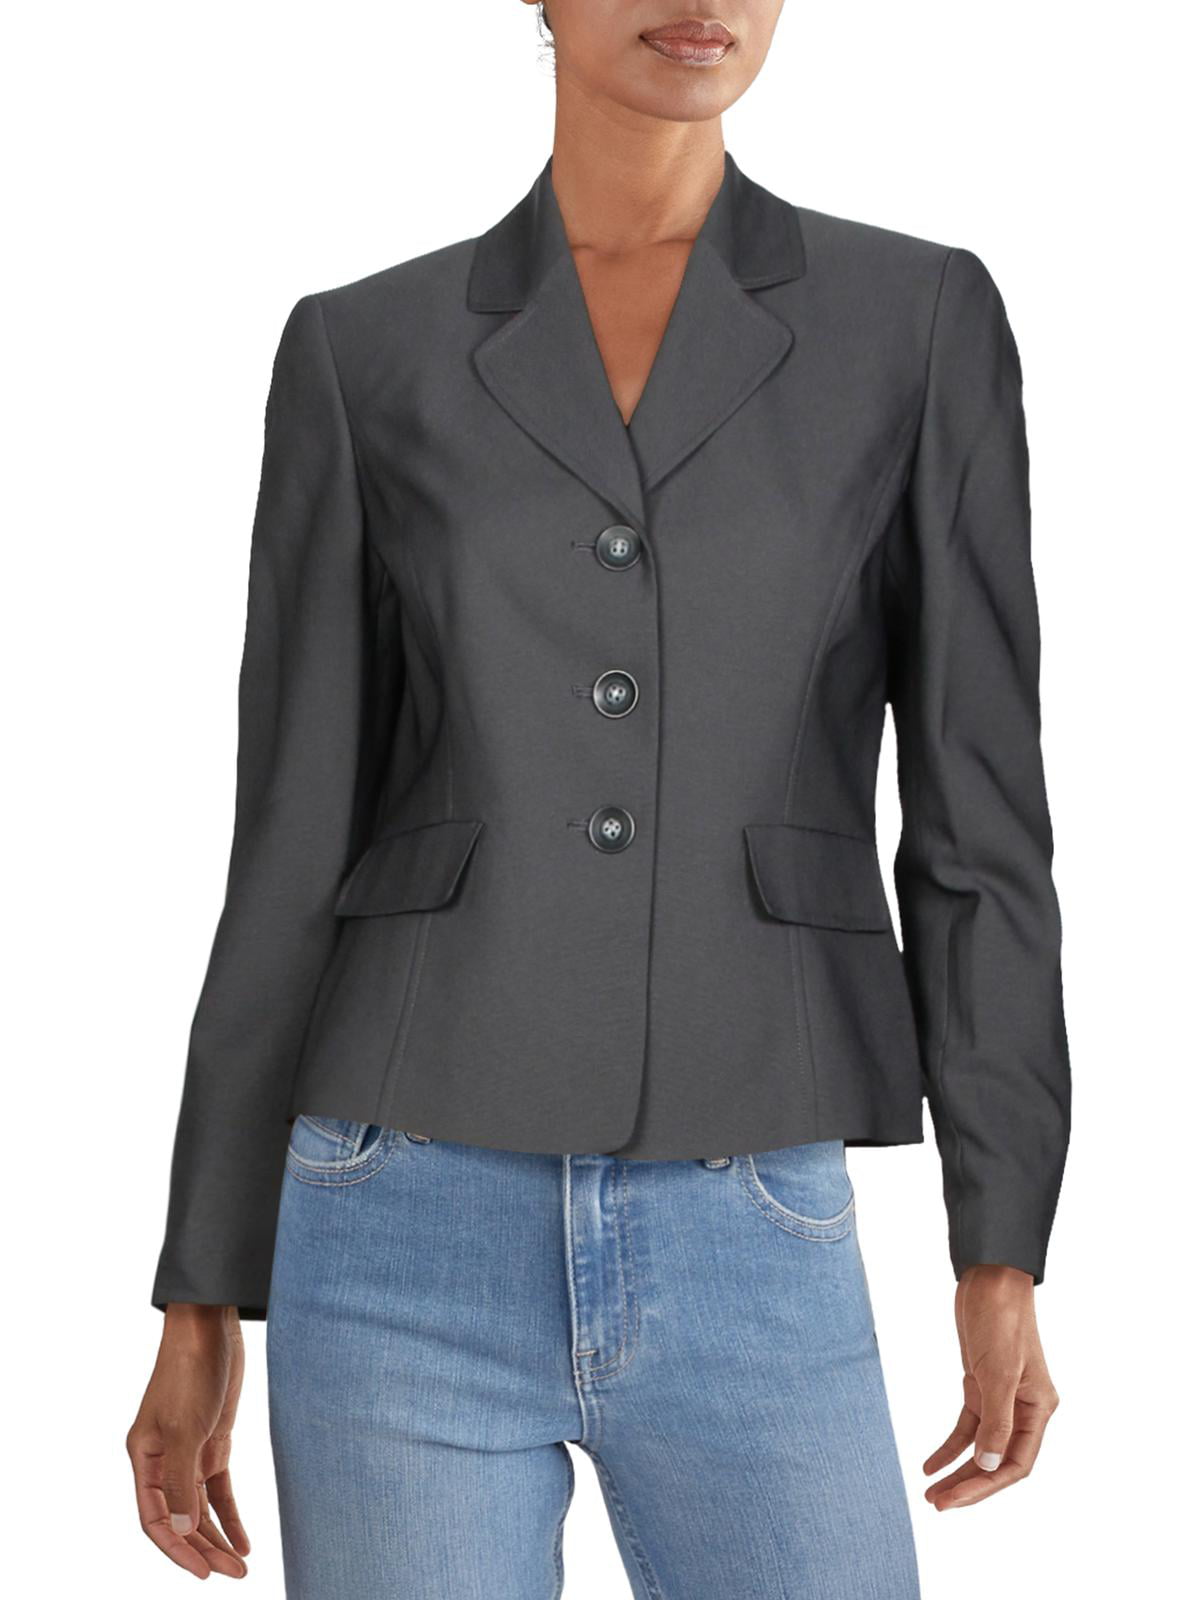 Winwinus Women Flexible Fit Solid Office Suits 1 Button Blazer